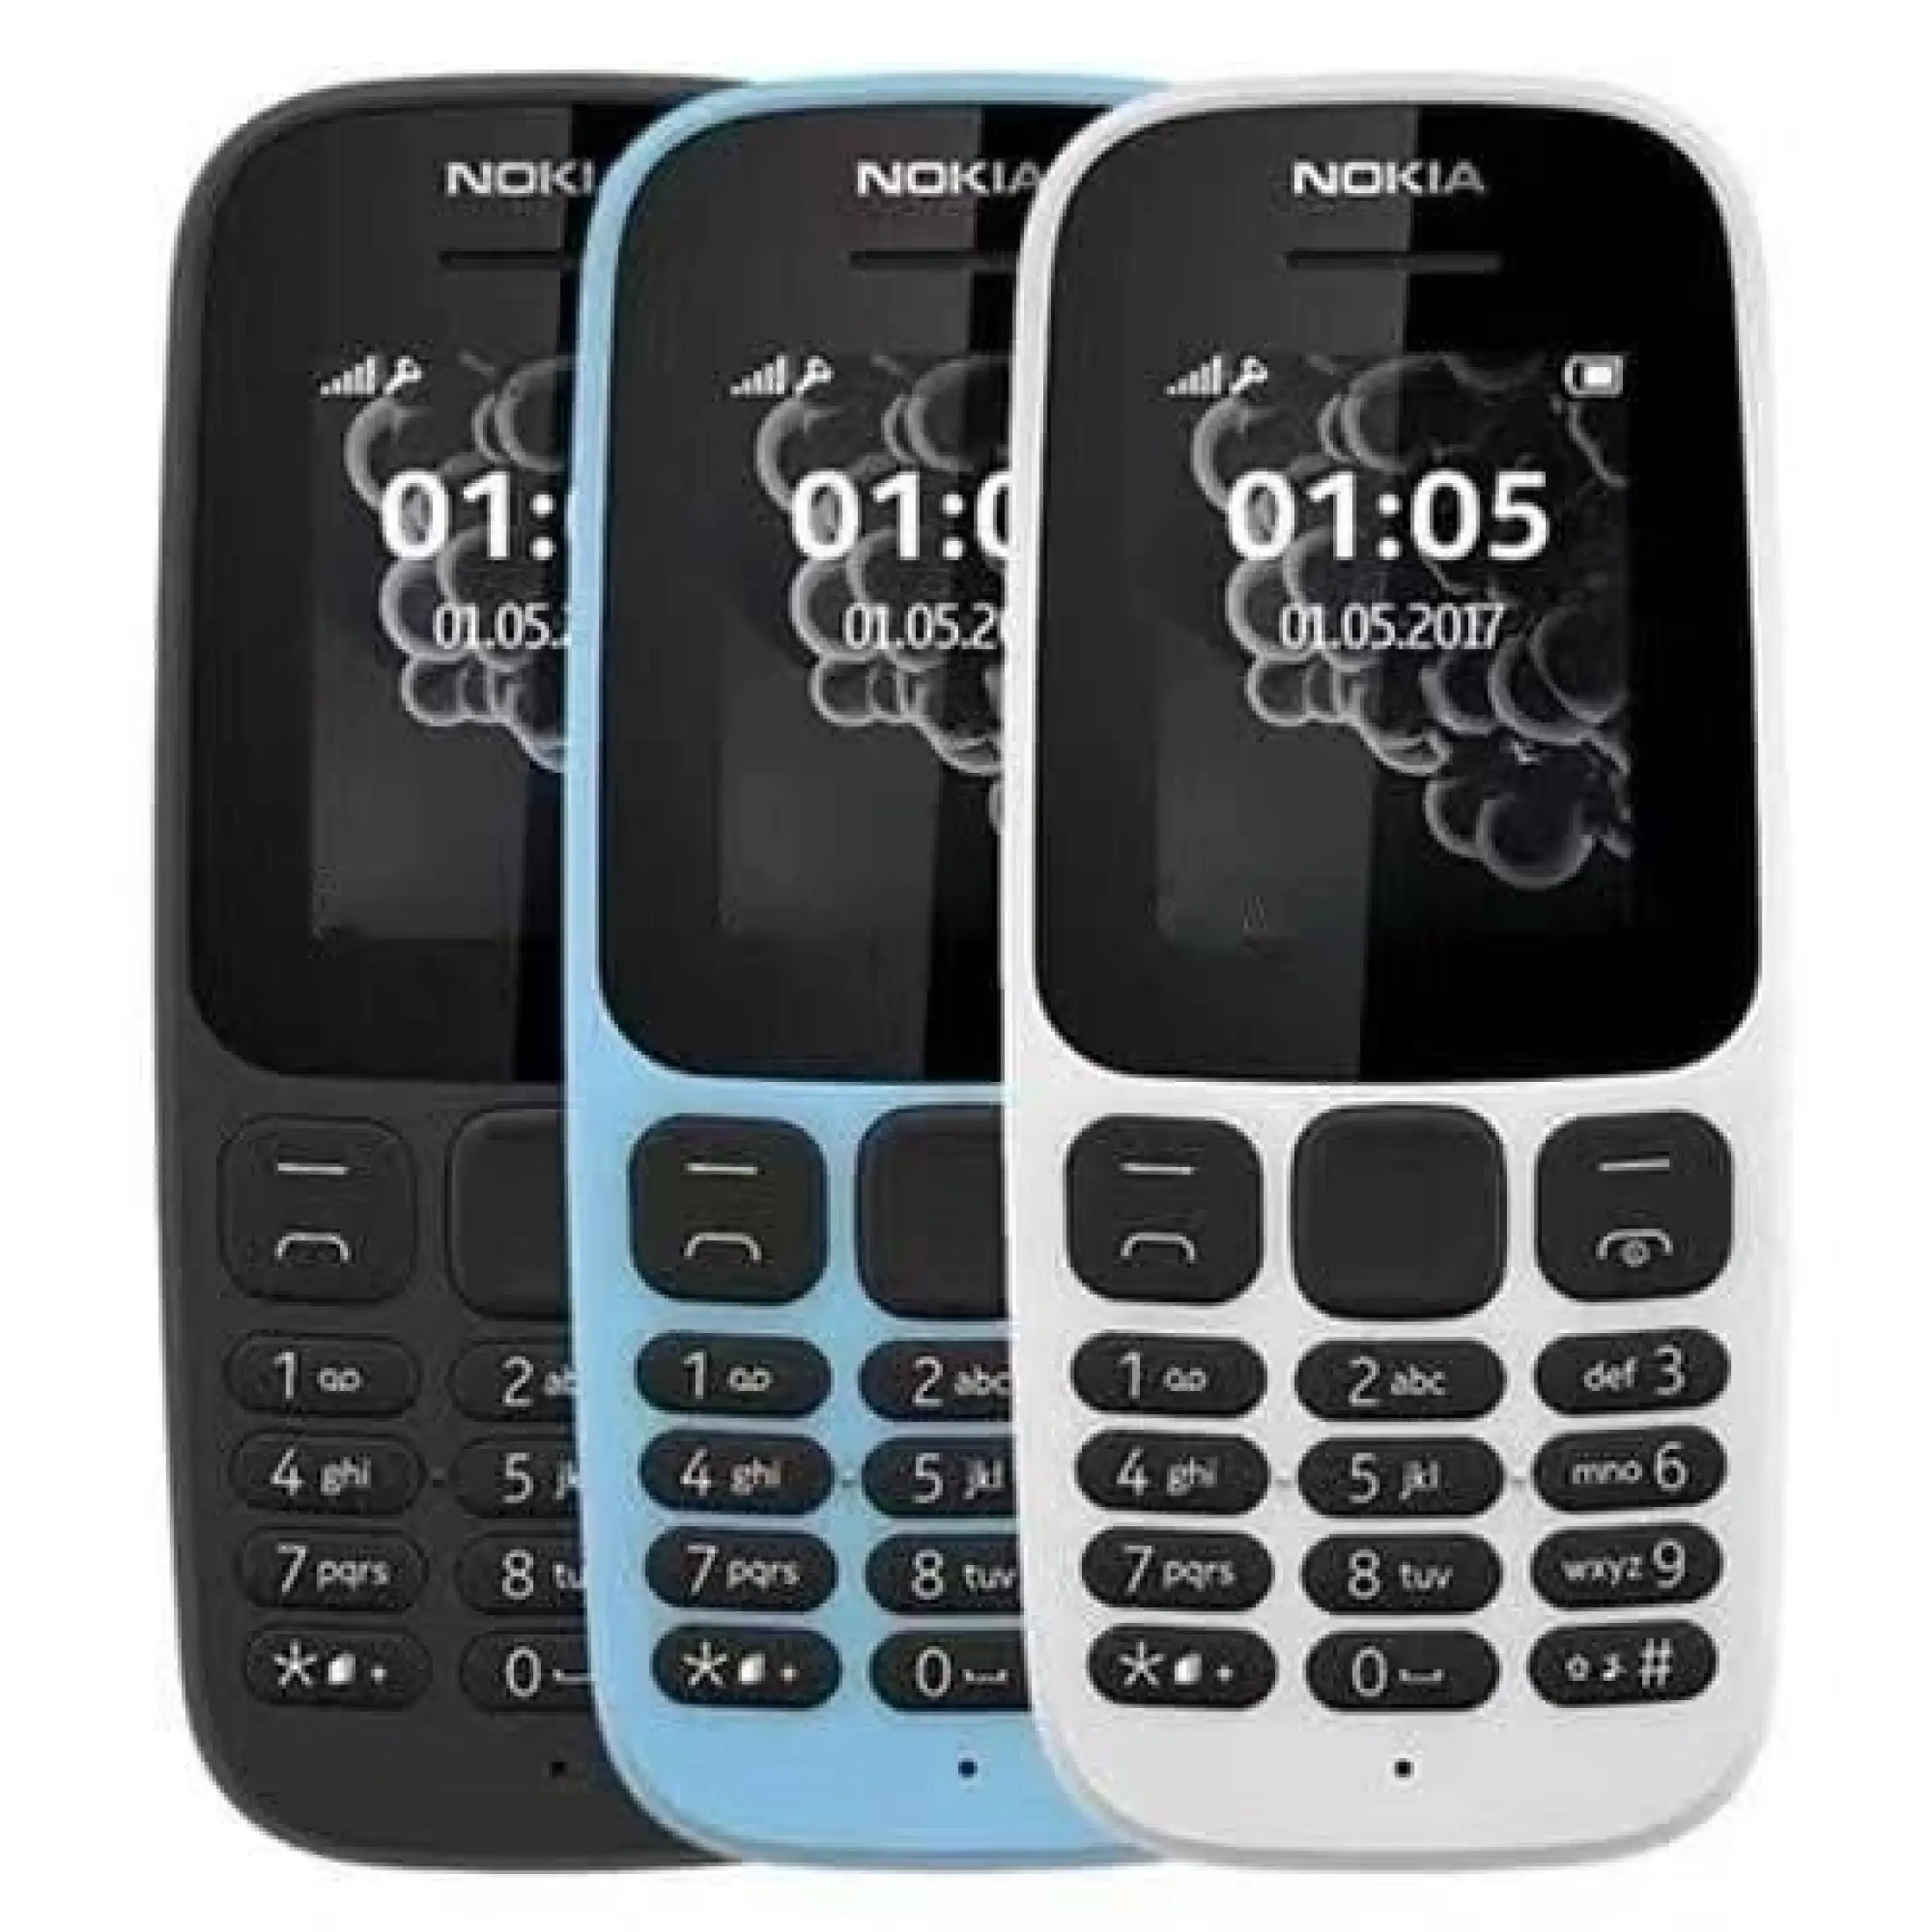 Handphone Nokia 105 Jadul Hp Nokia N 105 Dual Sim New Lazada Indonesia